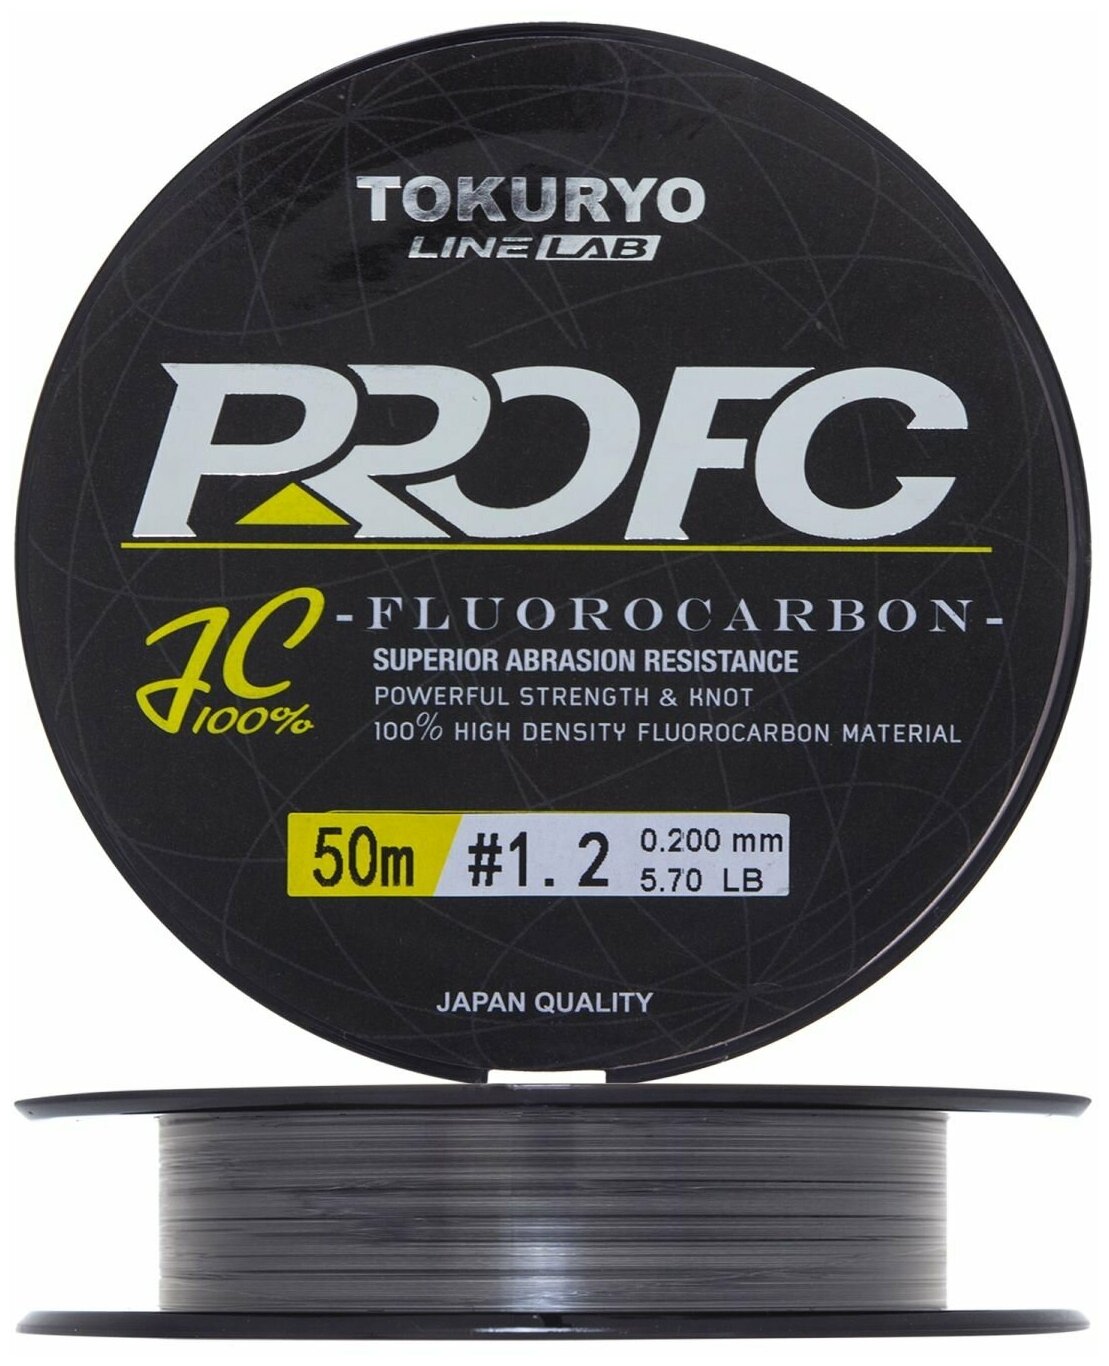 Леска флюорокарбон для рыбалки Tokuryo Fluorocarbon Pro FC #1,2 50м (clear) / Сделано в Японии